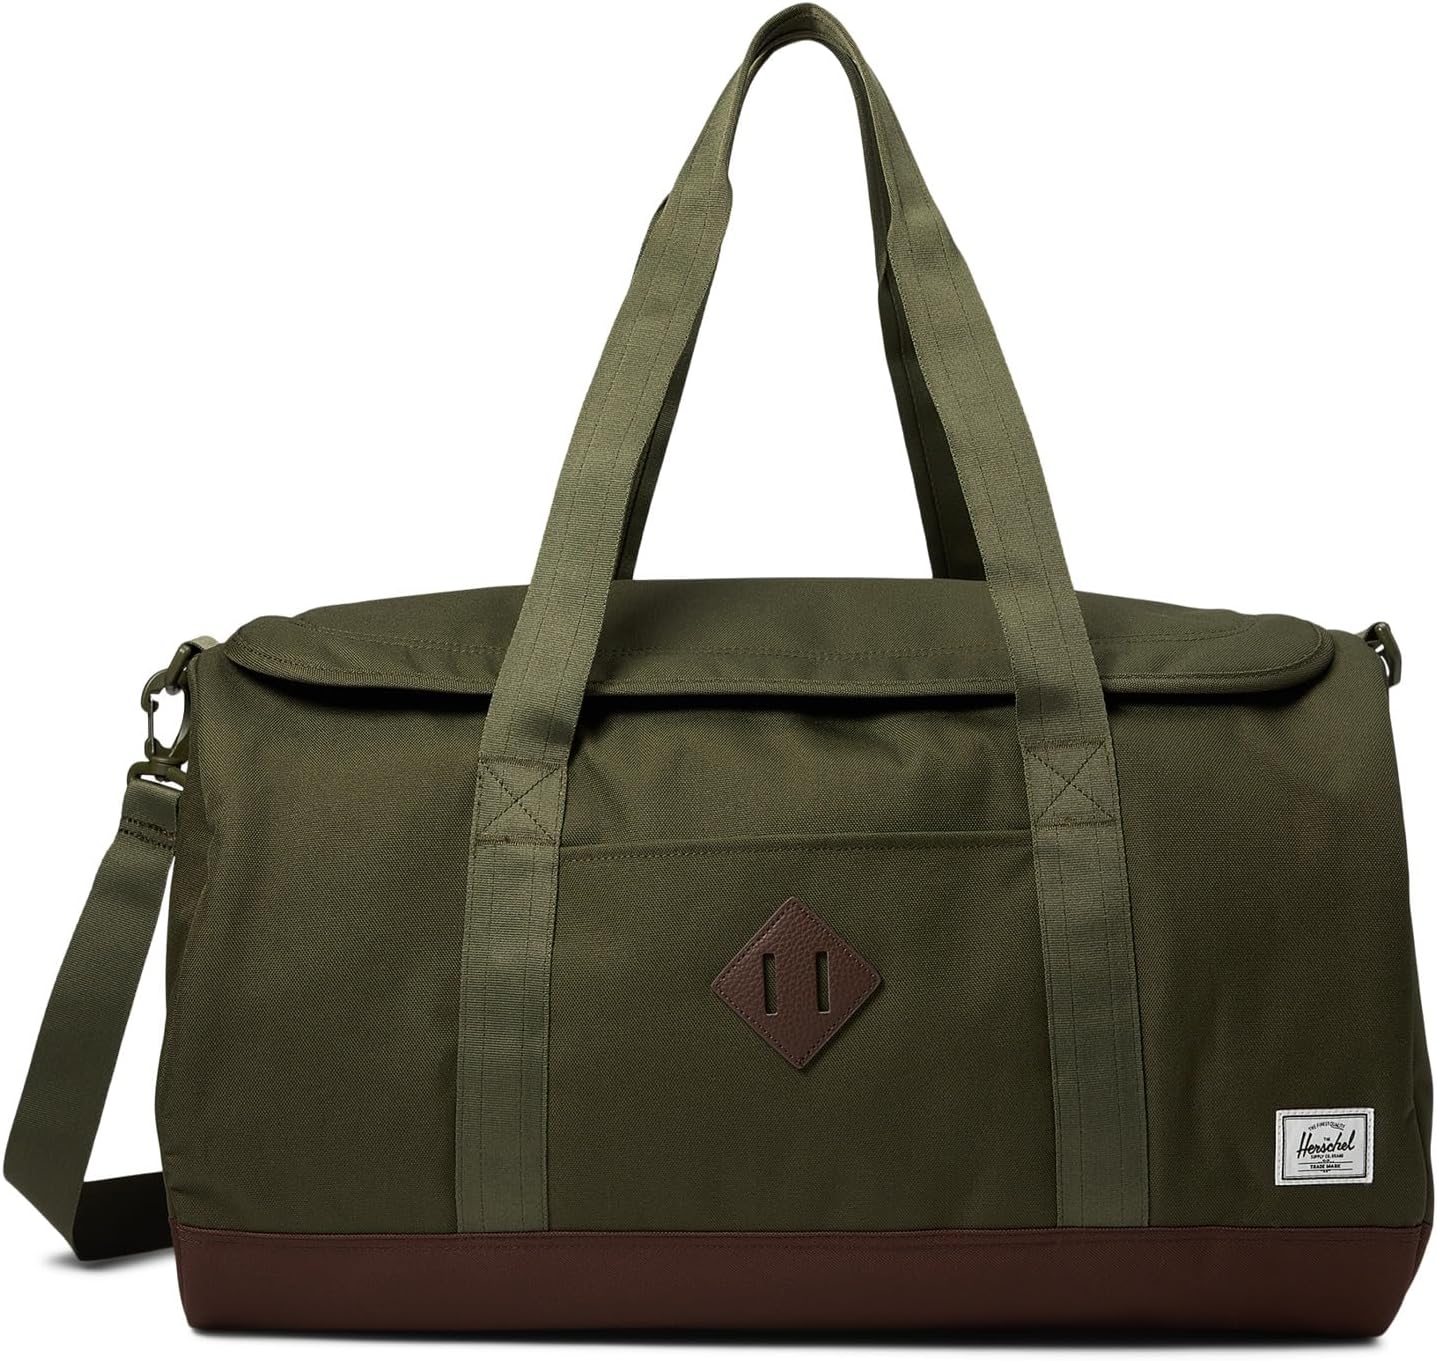 рюкзак heritage backpack herschel supply co цвет ivy green chicory coffee Спортивная сумка Heritage Herschel Supply Co., цвет Ivy Green/Chicory Coffee